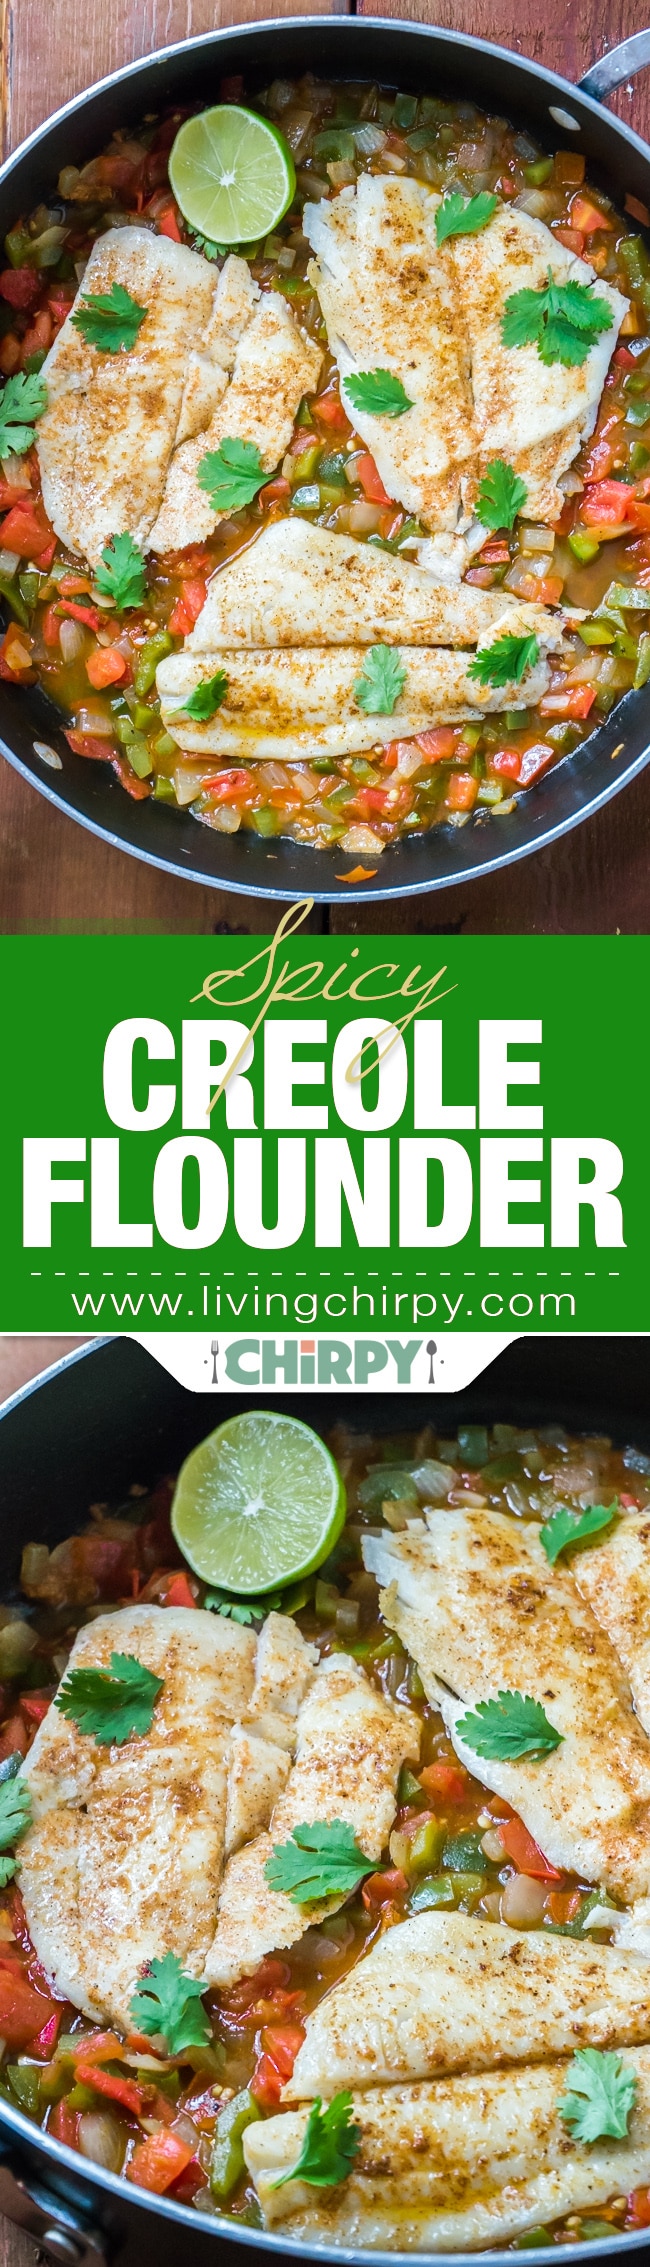 Spicy Creole Flounder